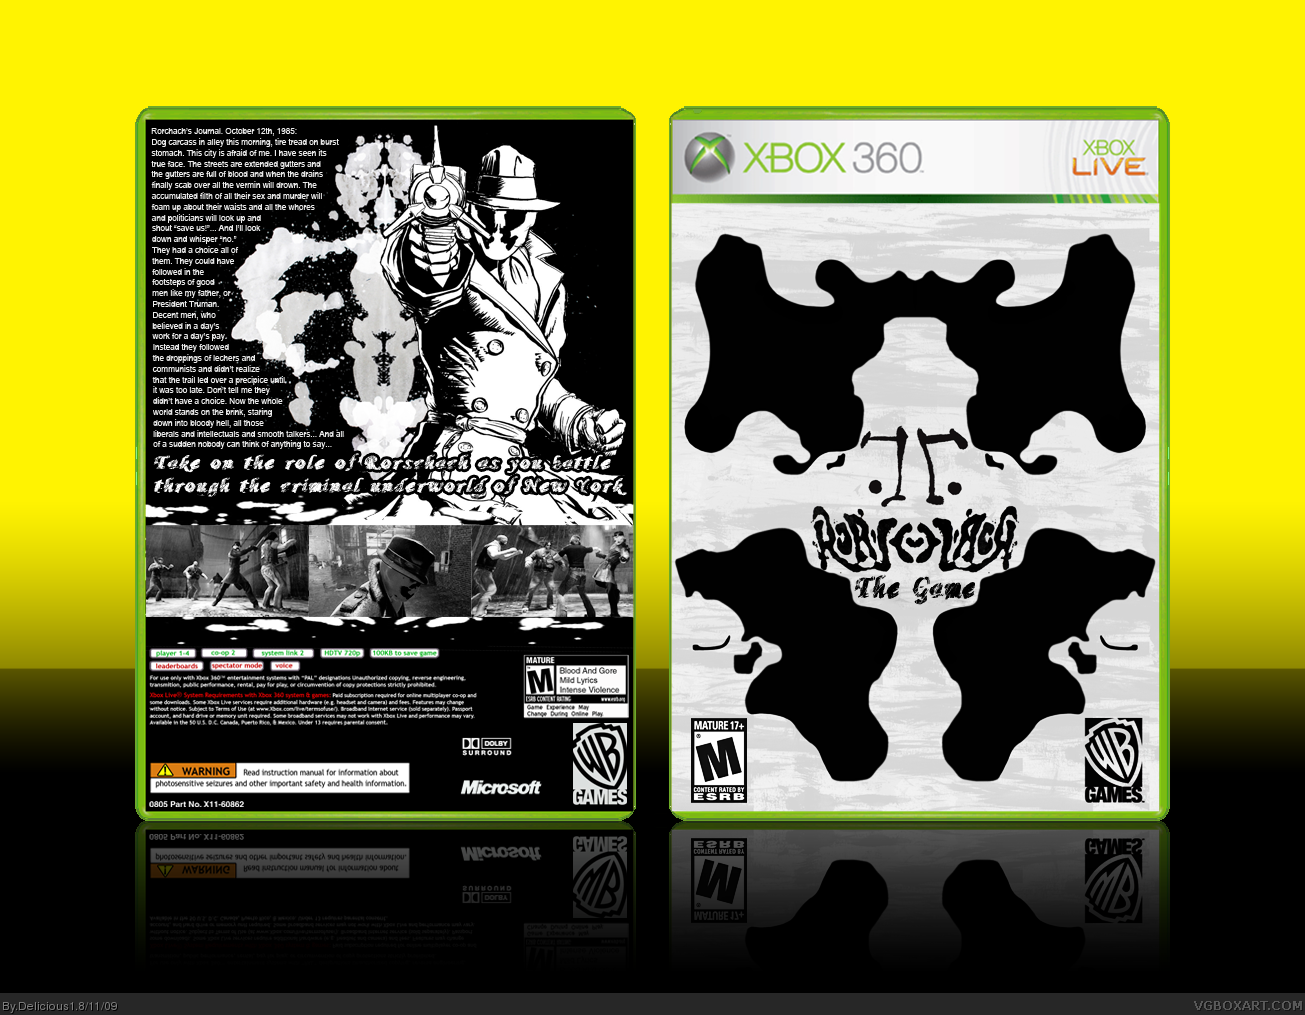 Rorschach: The Game box cover